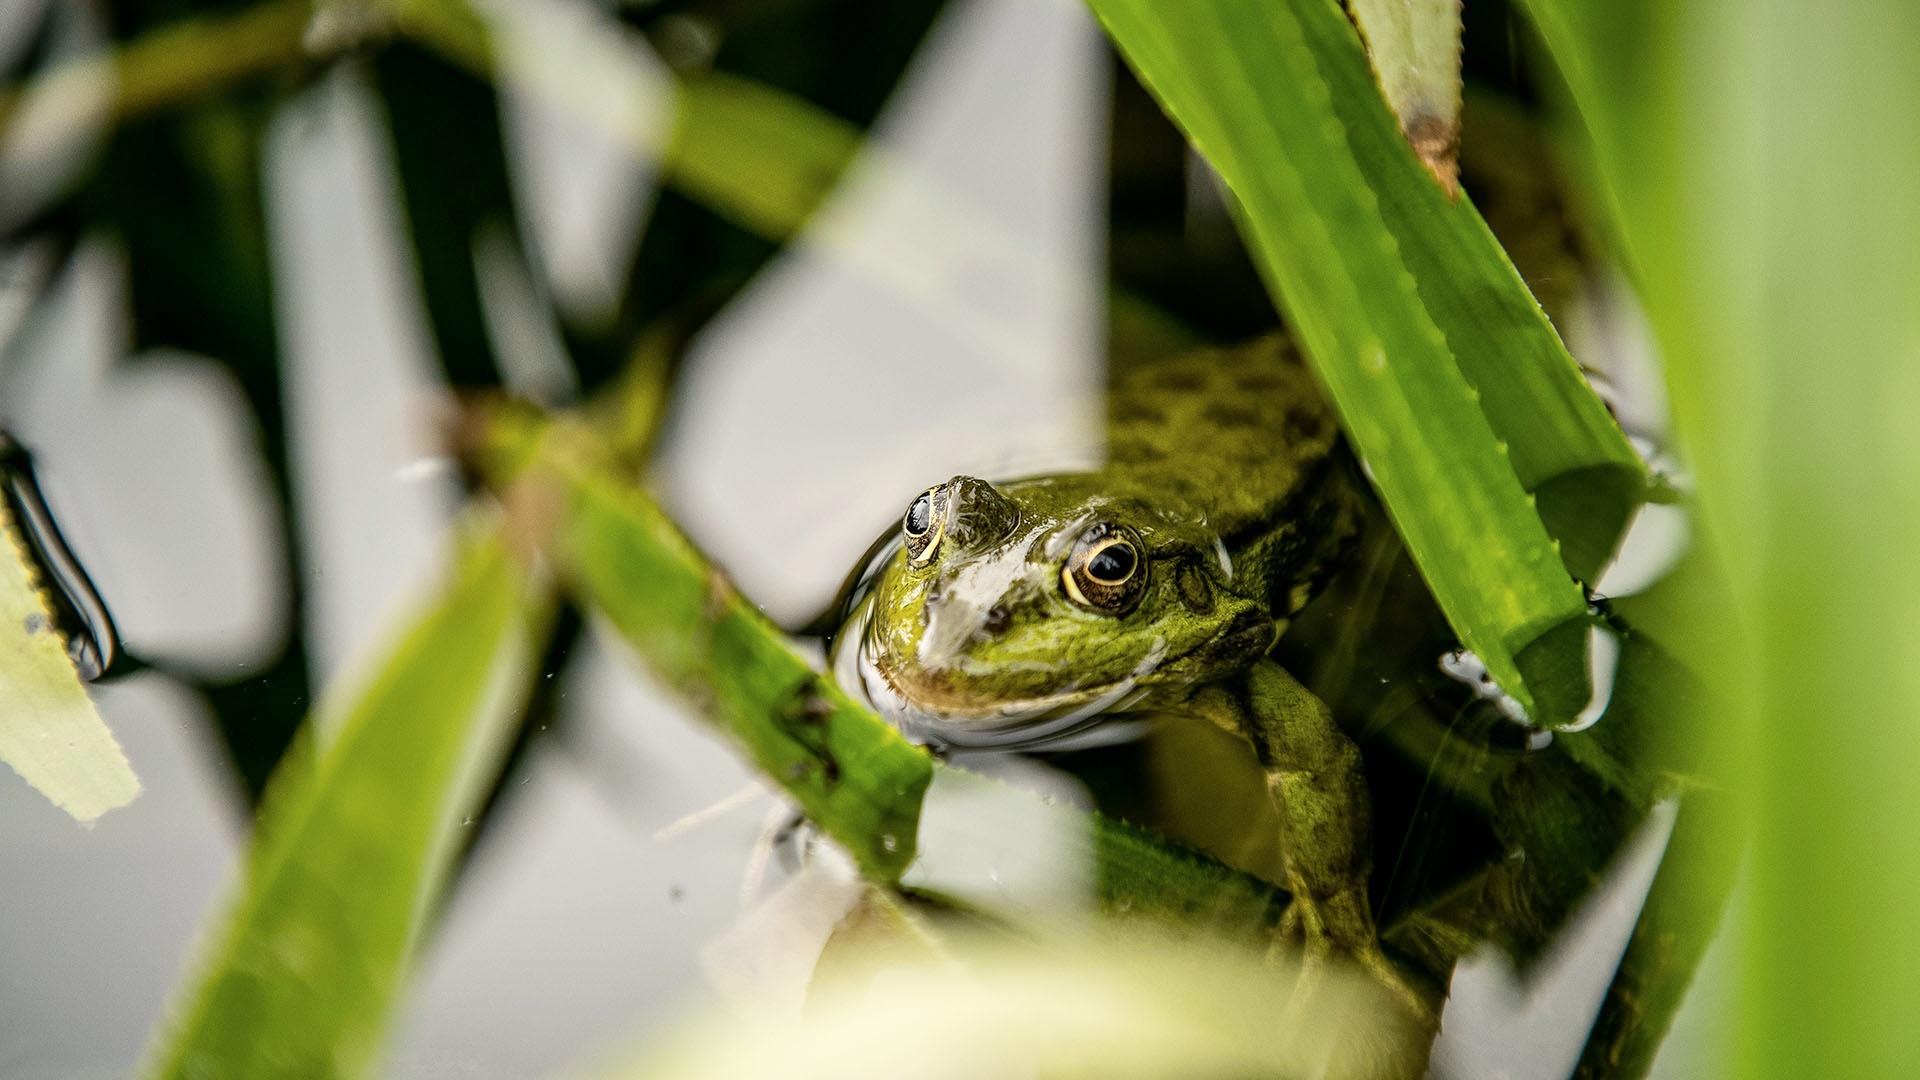 Closeup image of a marsh frog.